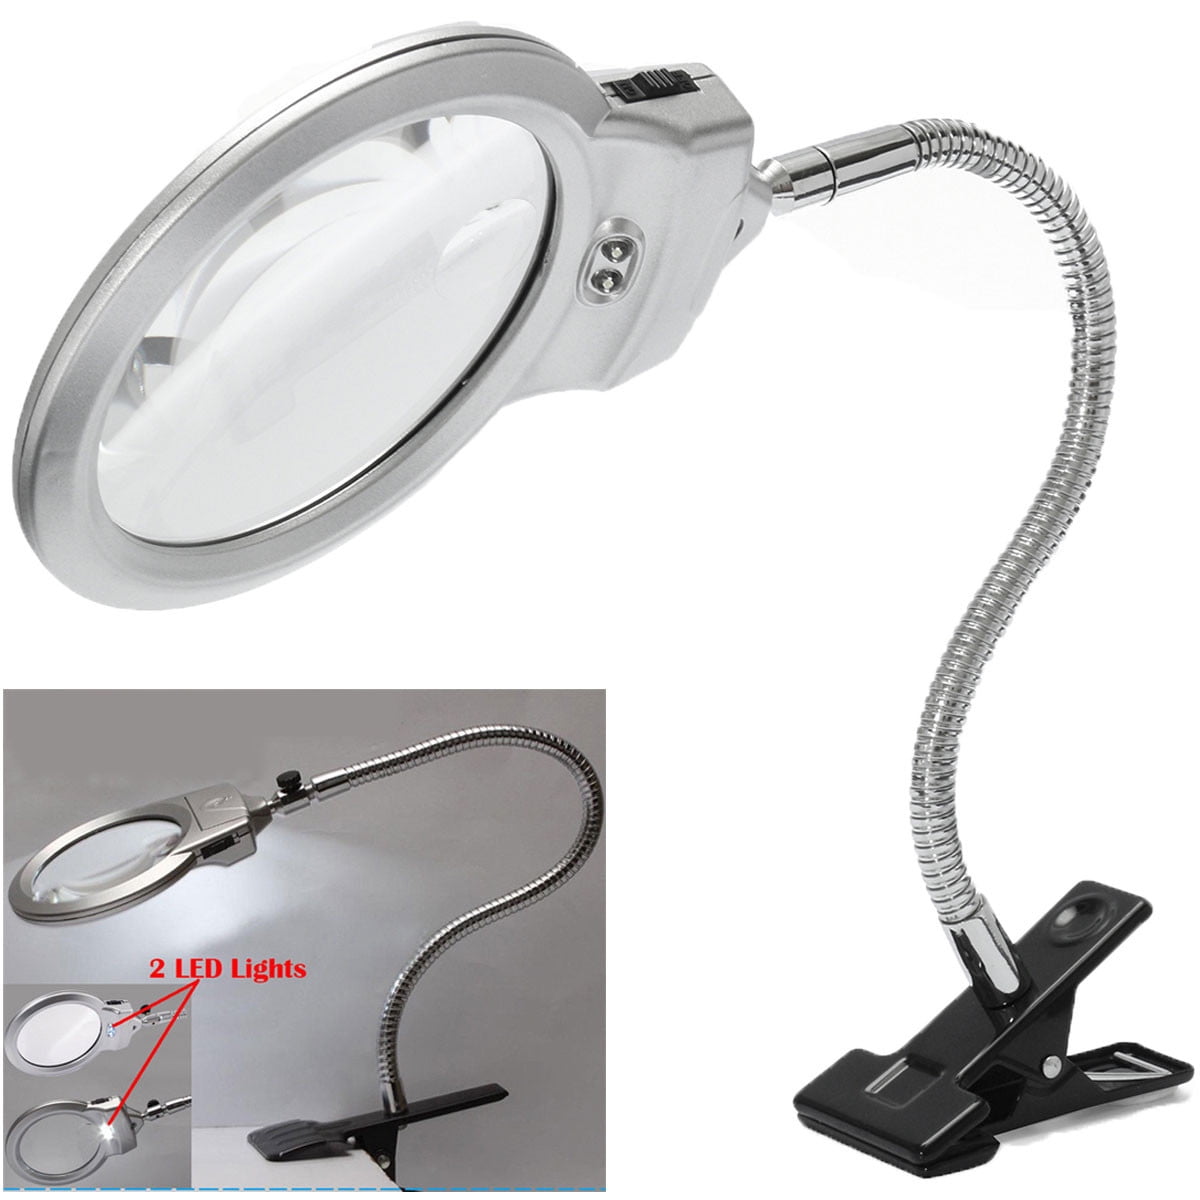 Large Lens Lighted Lamp Desk Magnifier Magnifying Glass with Holder LED Light 